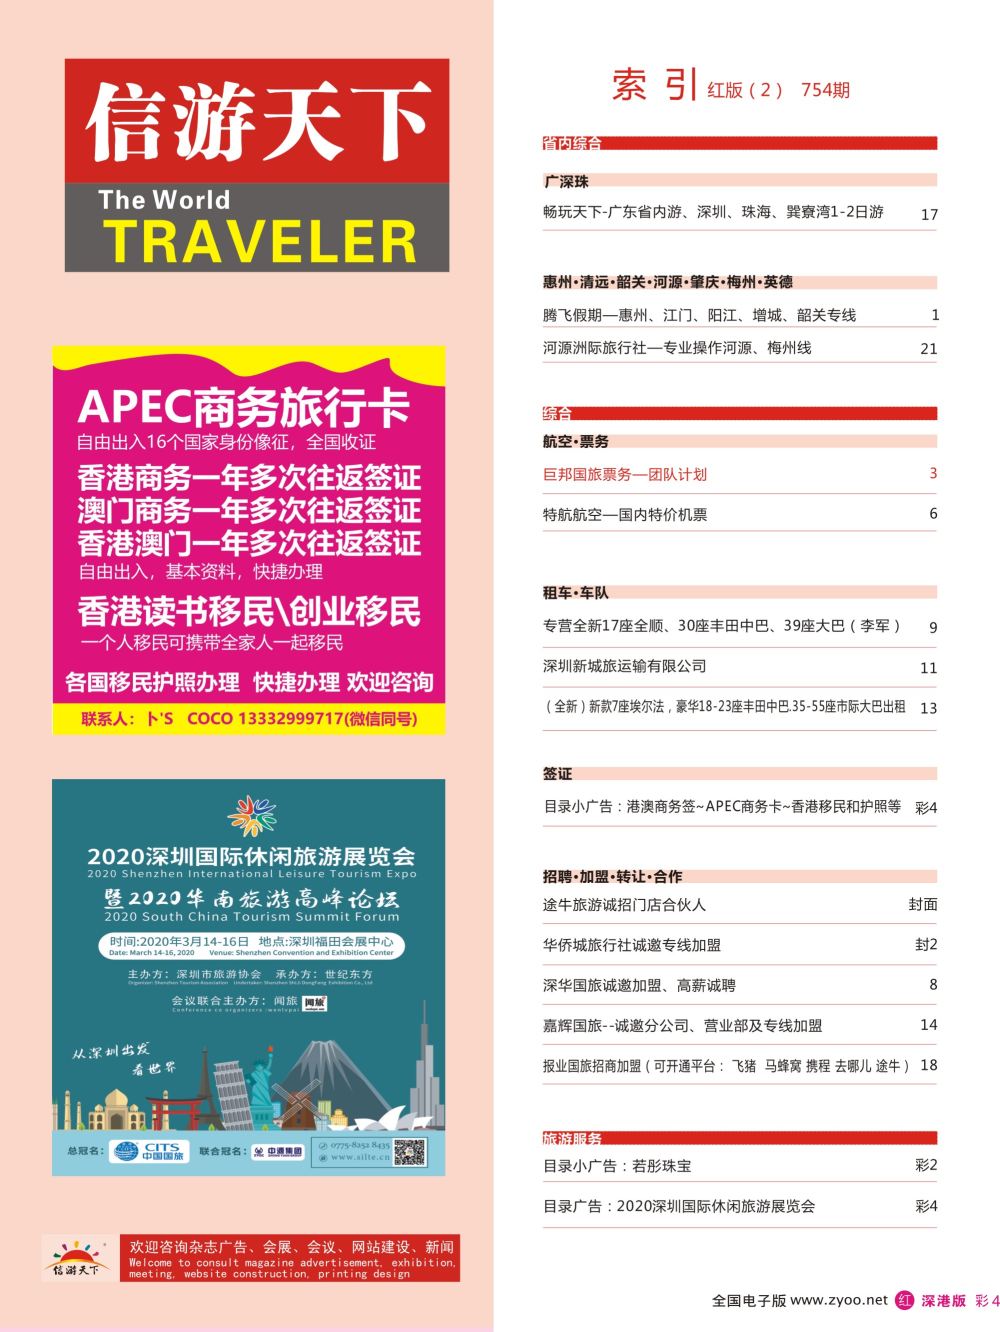 r彩004  2020深圳国际休闲旅游展览会